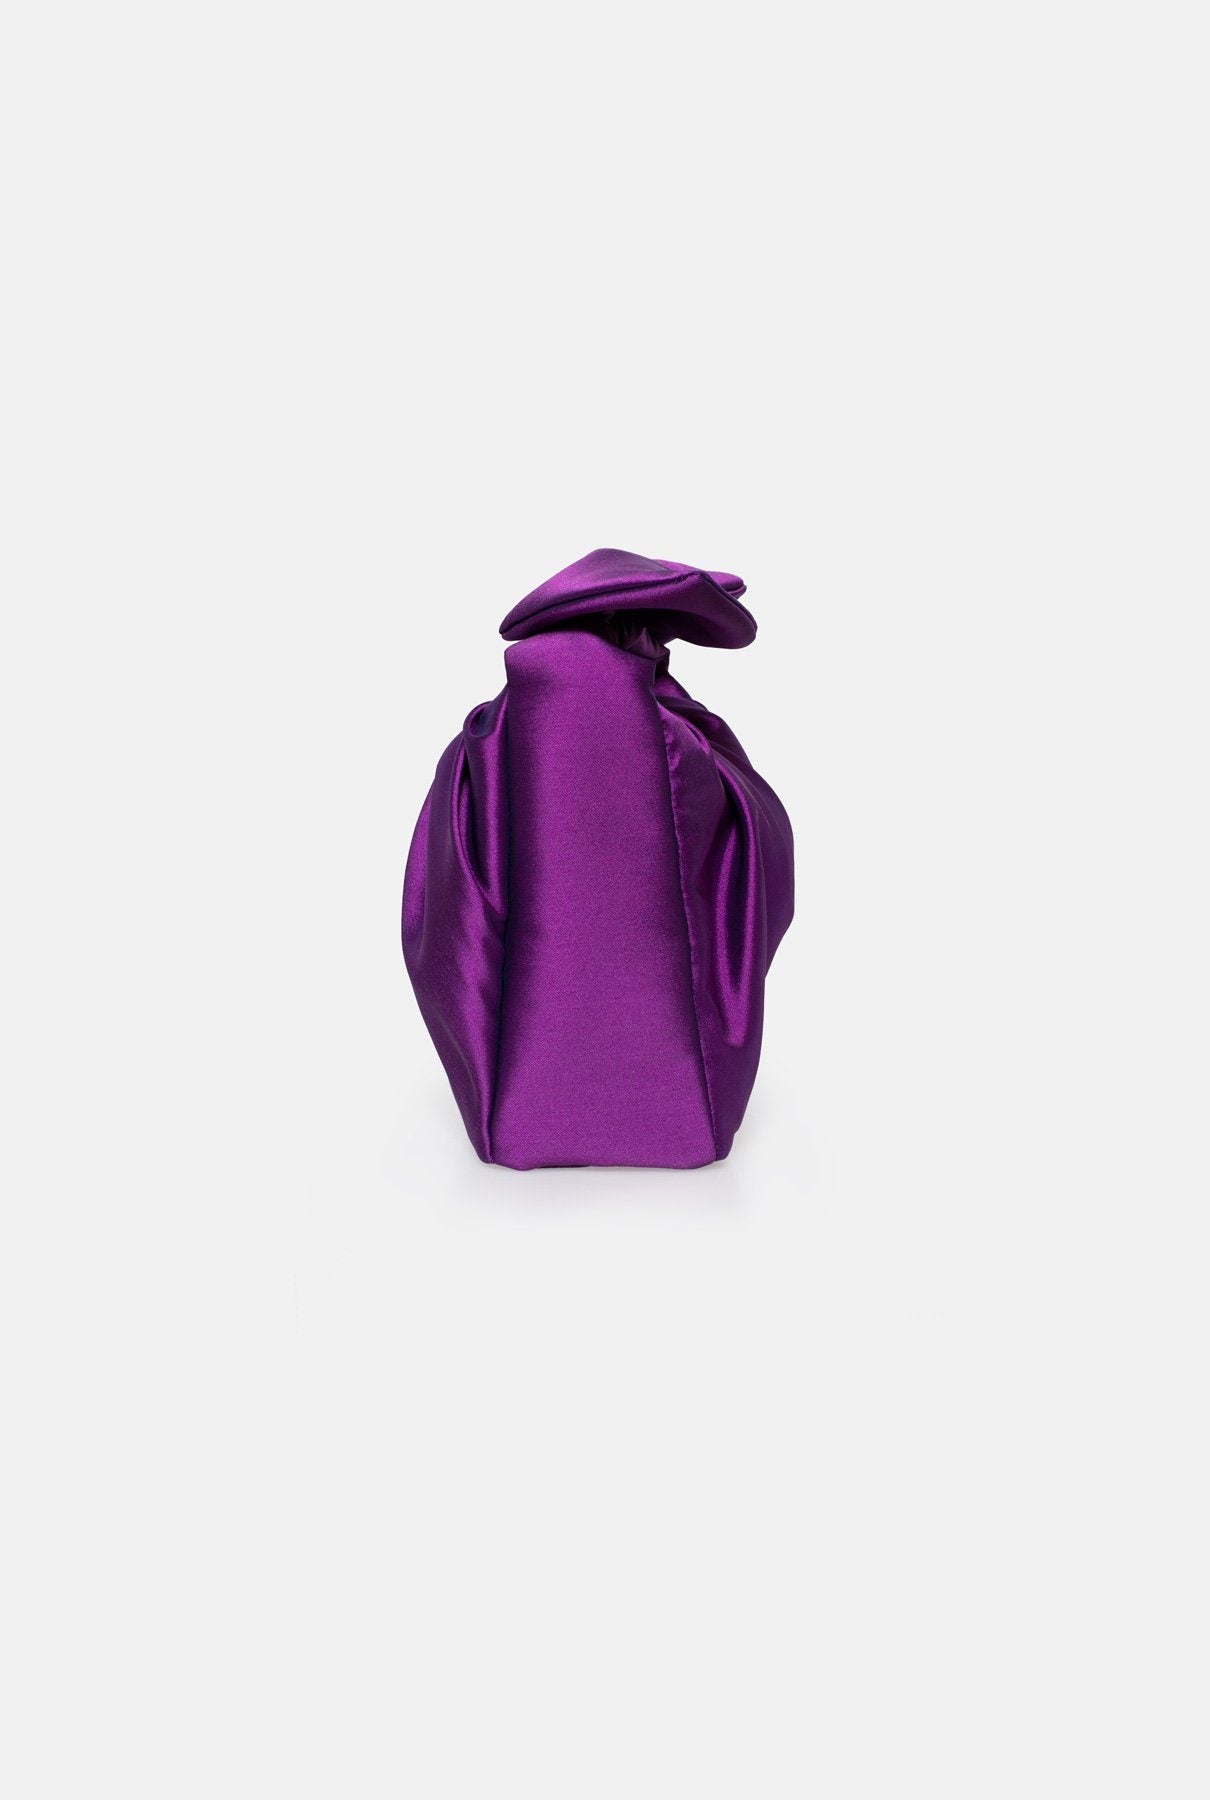 Mary Purple bag Laia Alen